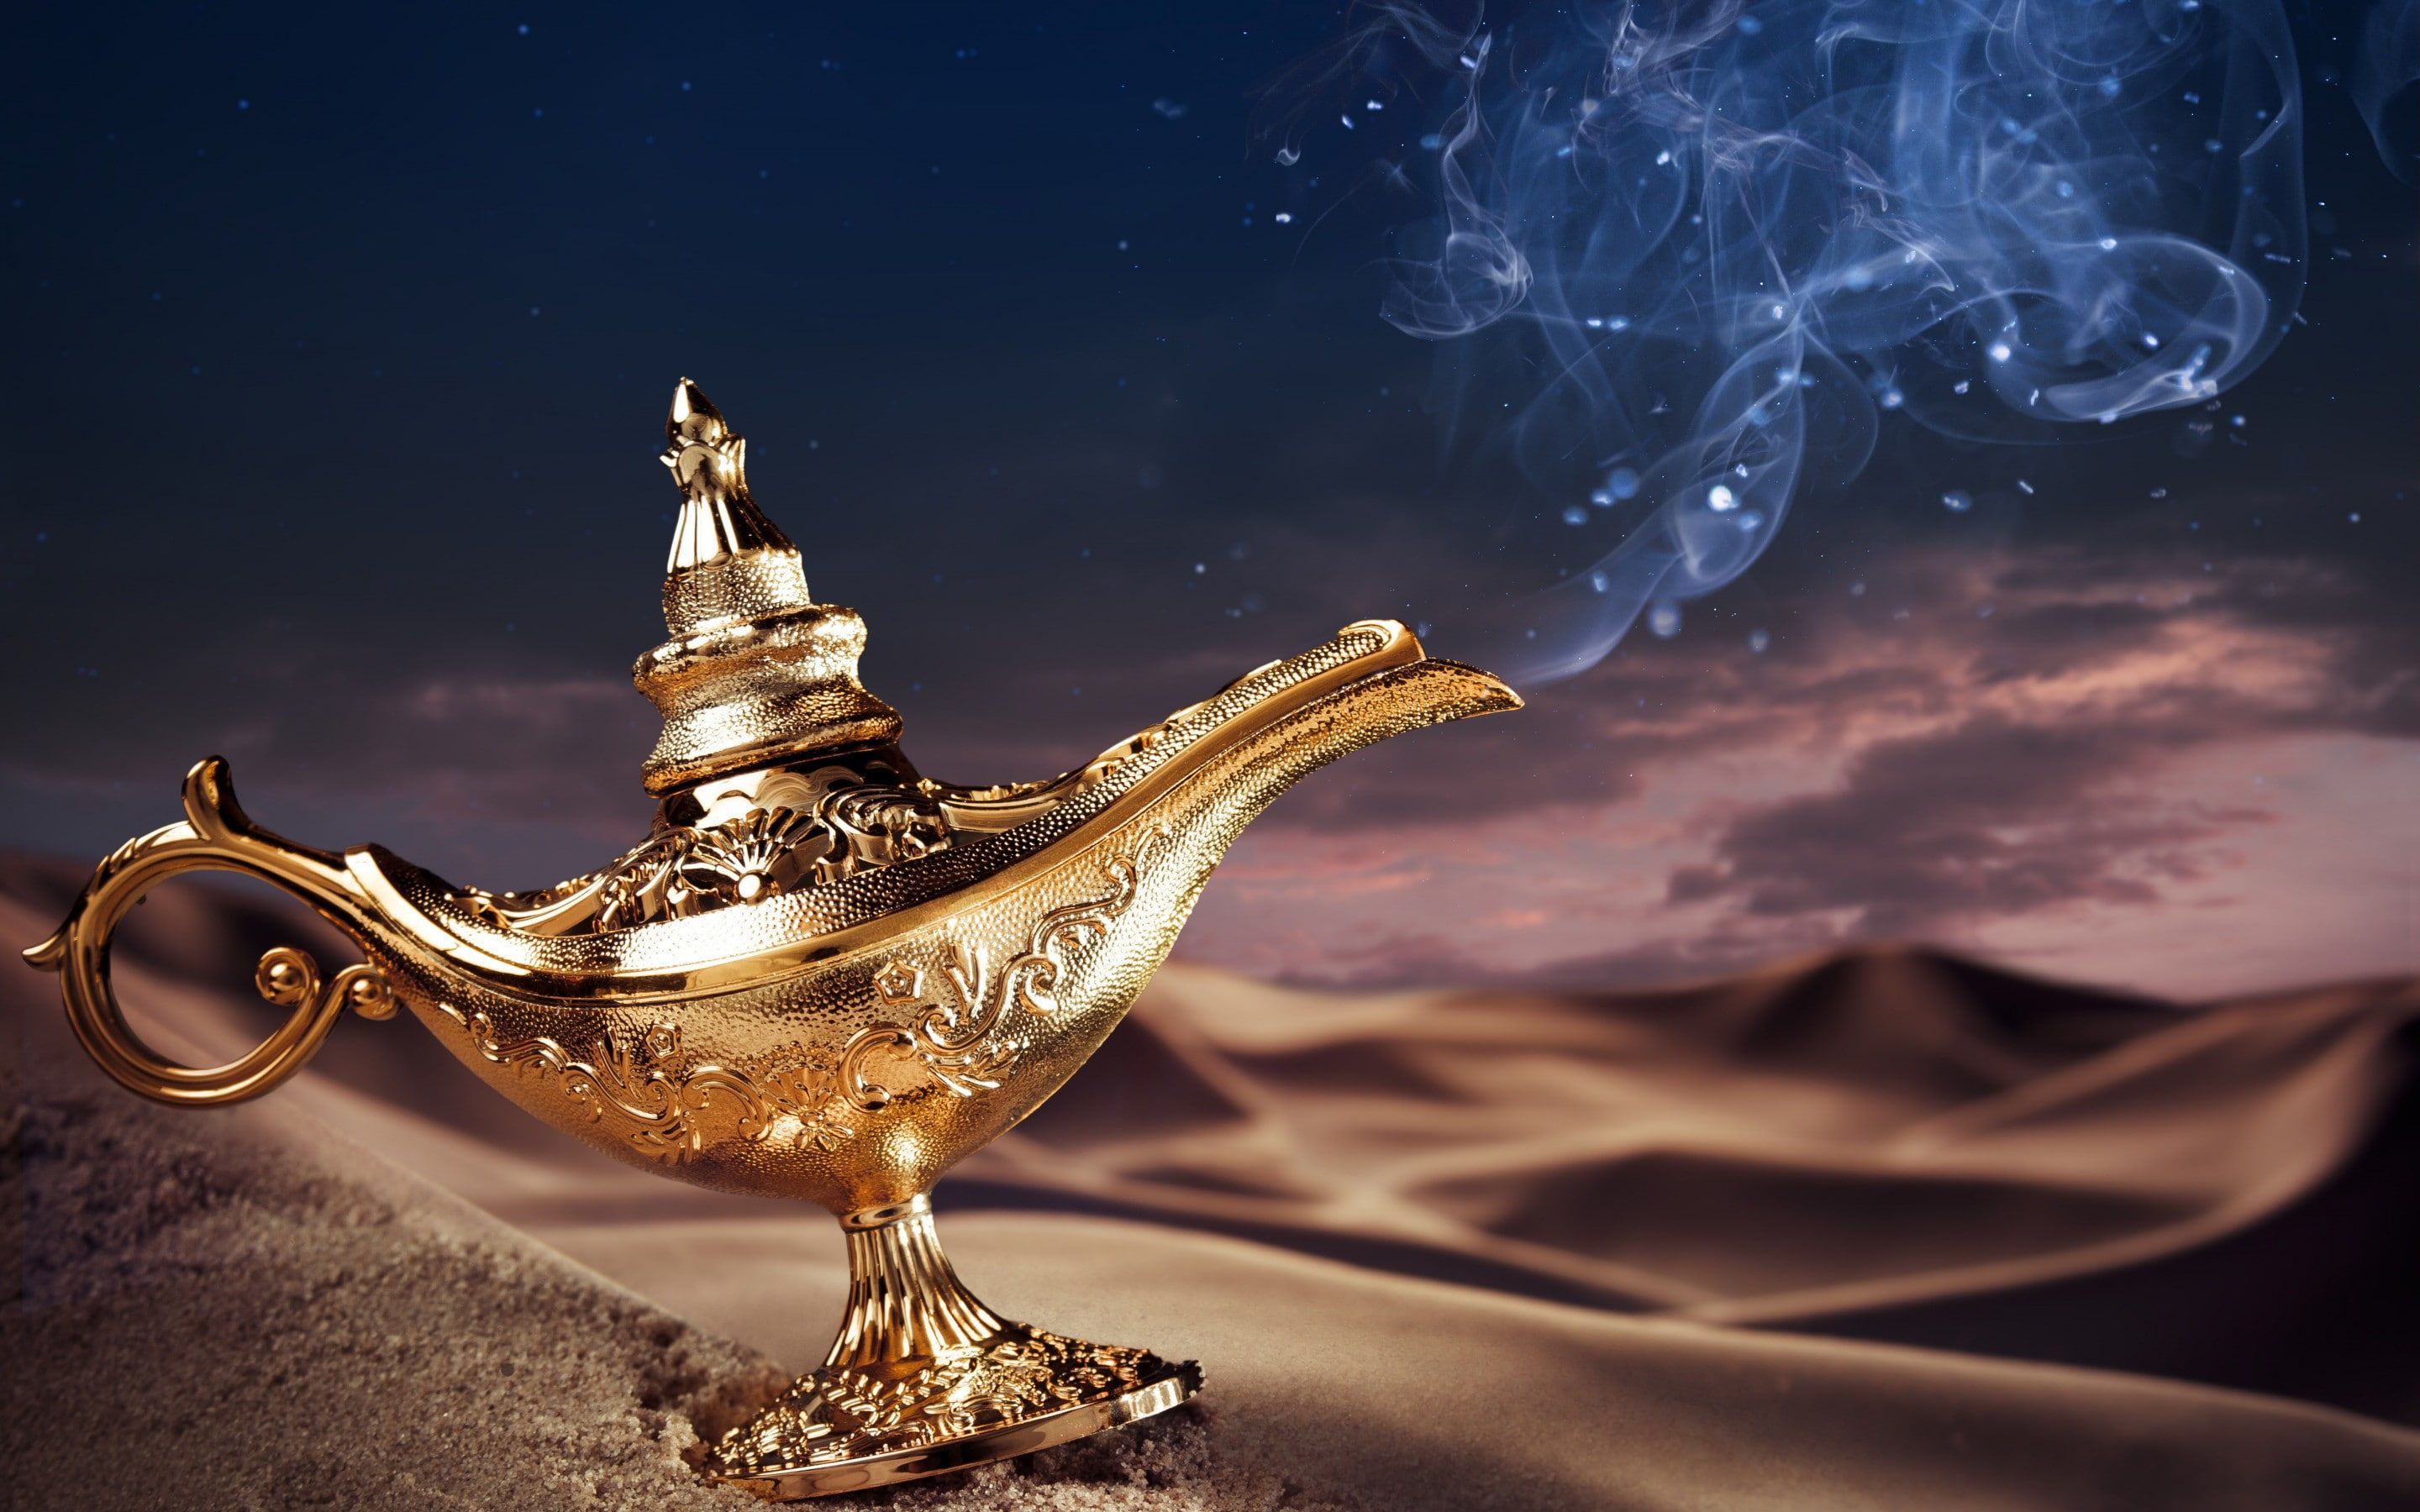 Lamp magic models, gold genie lamp illustration #background #desert #magic # lamp #models #picture K #wallpaper #hdwallpaper #de. Aladdin lamp, Genie lamp, Lamp